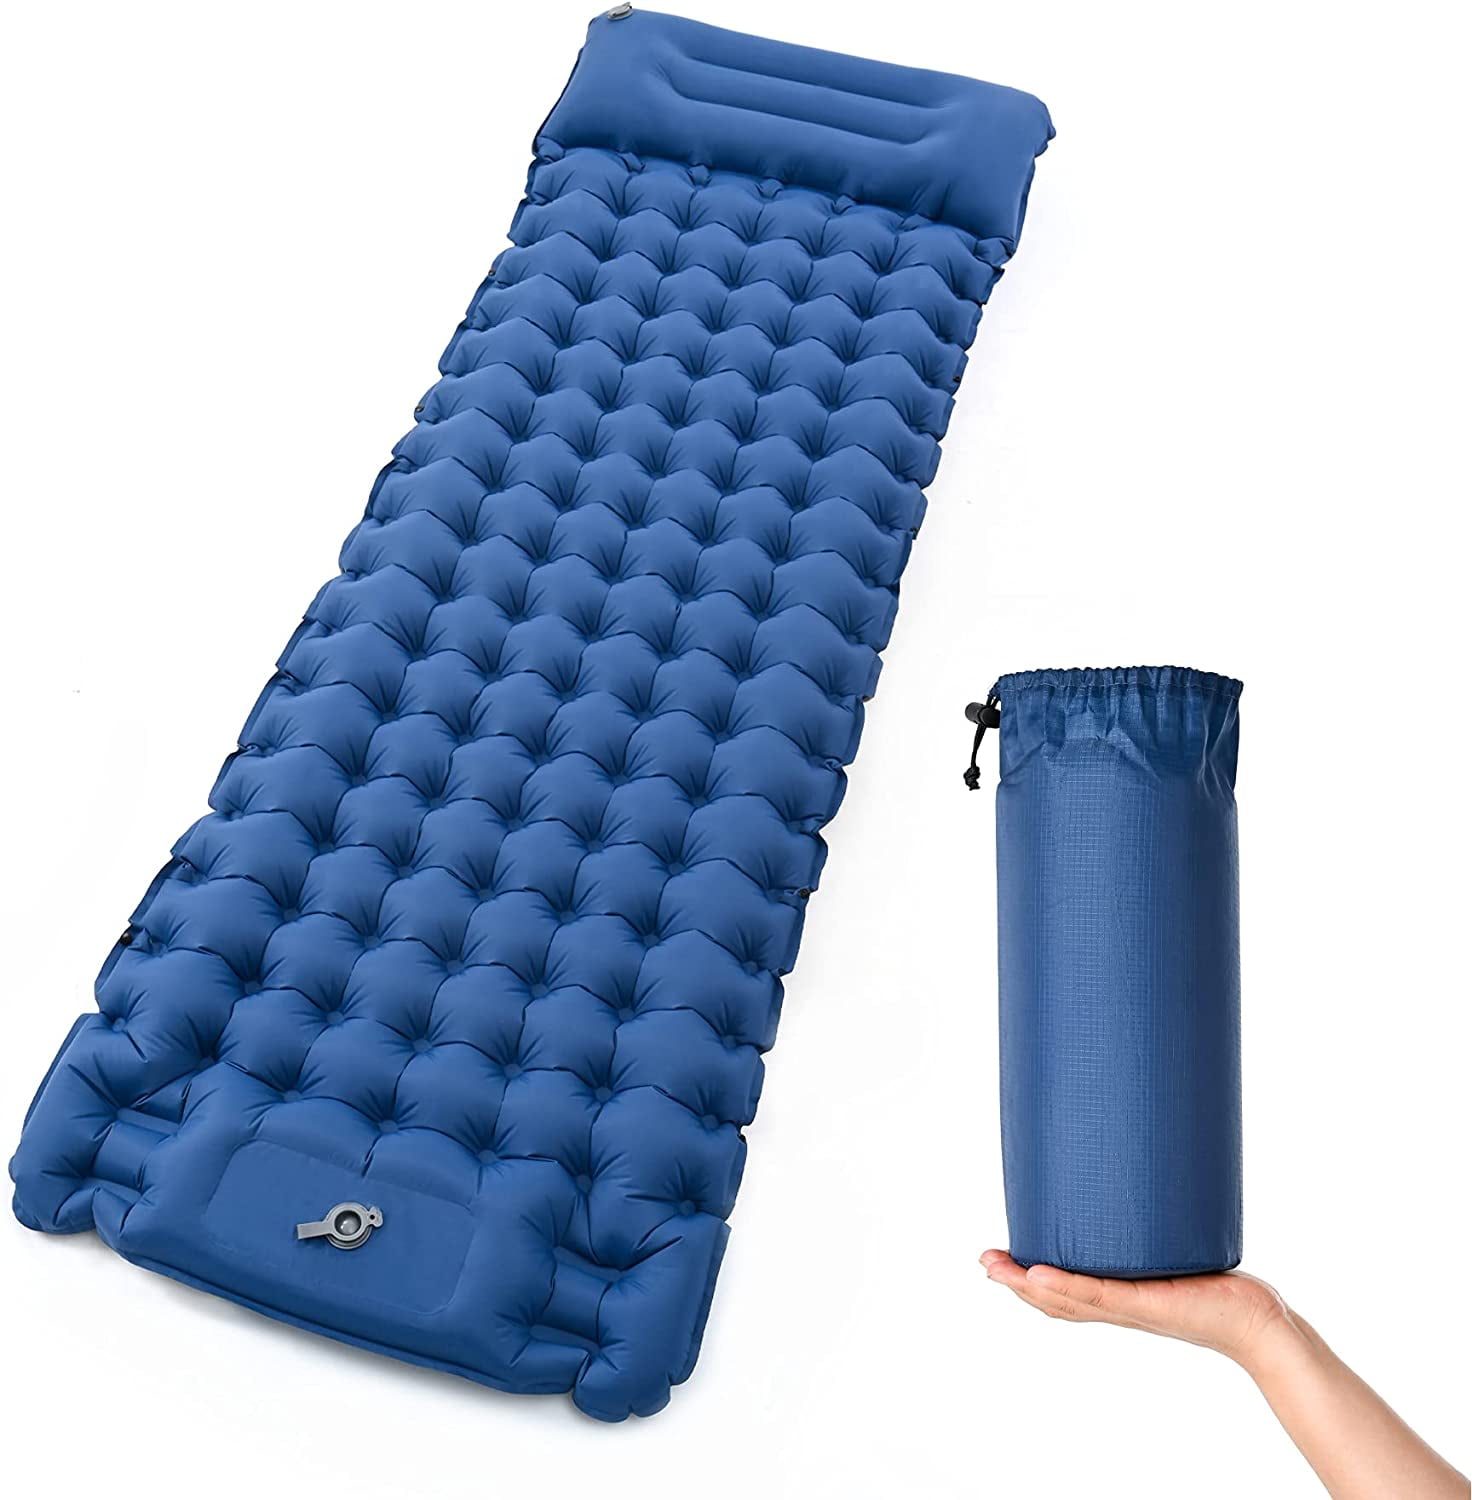 Sleeping Mat Waterproof Inflatable Camping Bed Portable Beach Tent Mattress Pad 